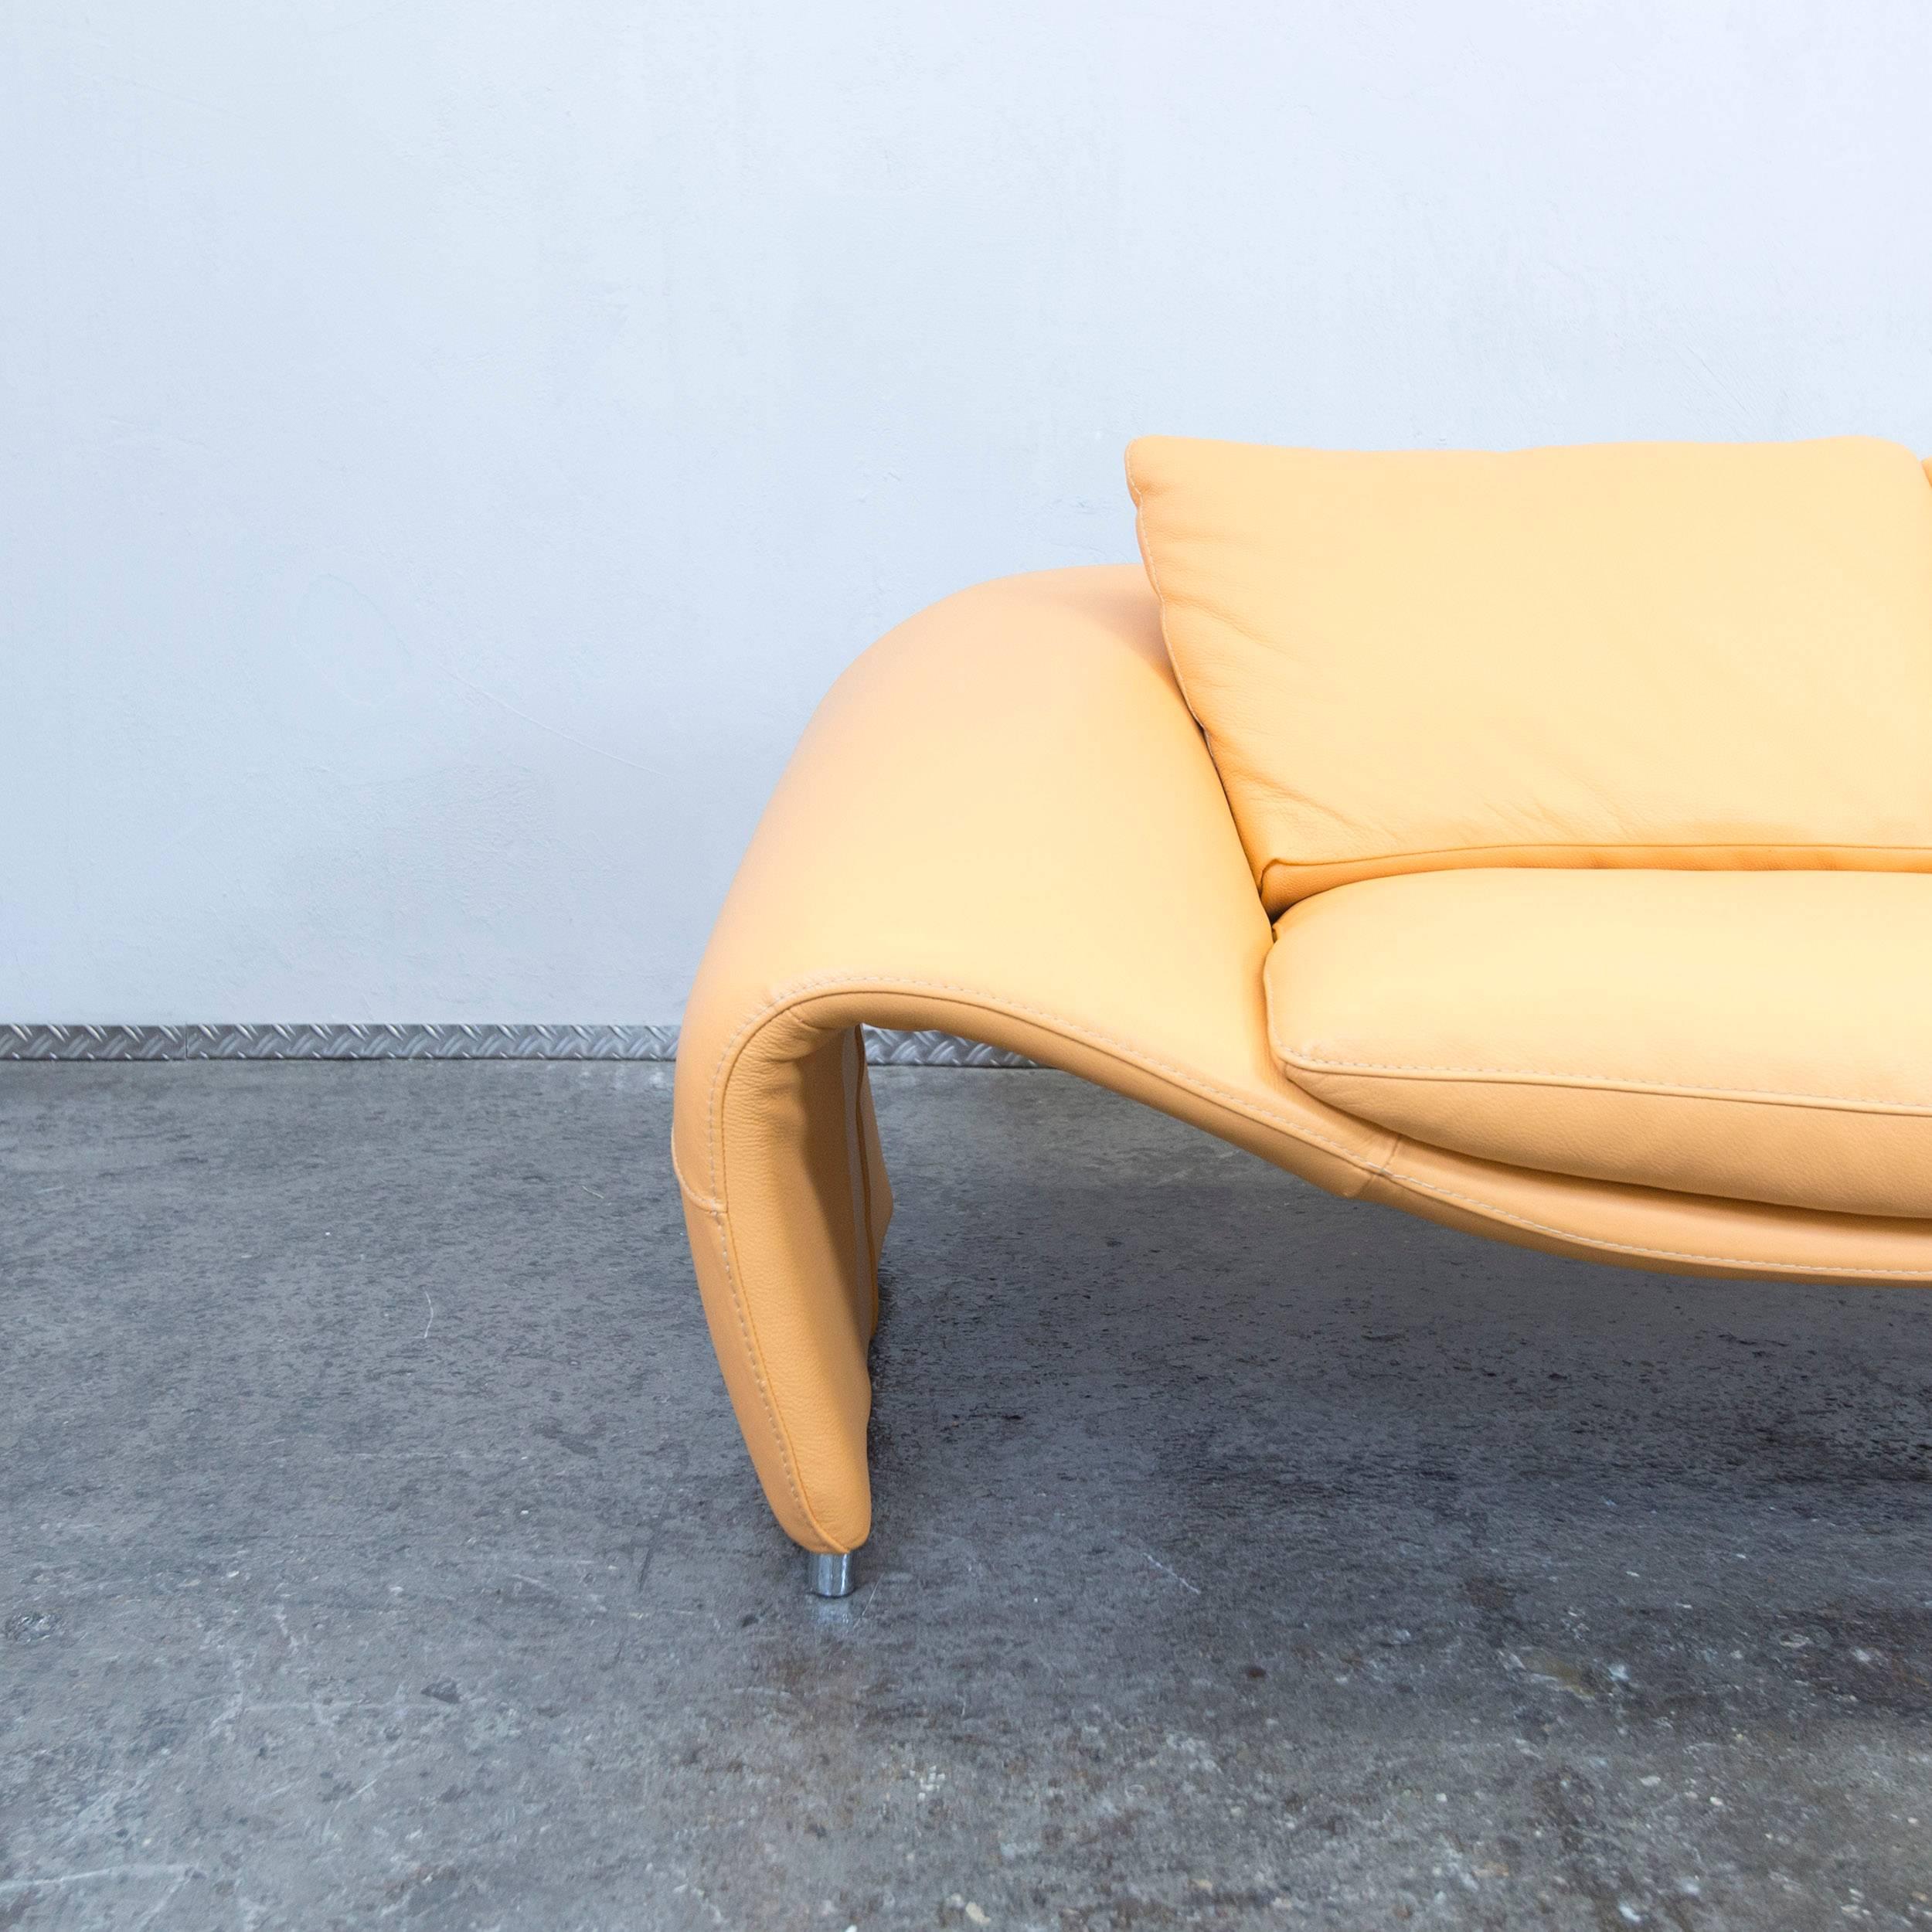 Yellow colored original Chateau d'Ax Voga designer leather sofa in a minimalistic and modern design.